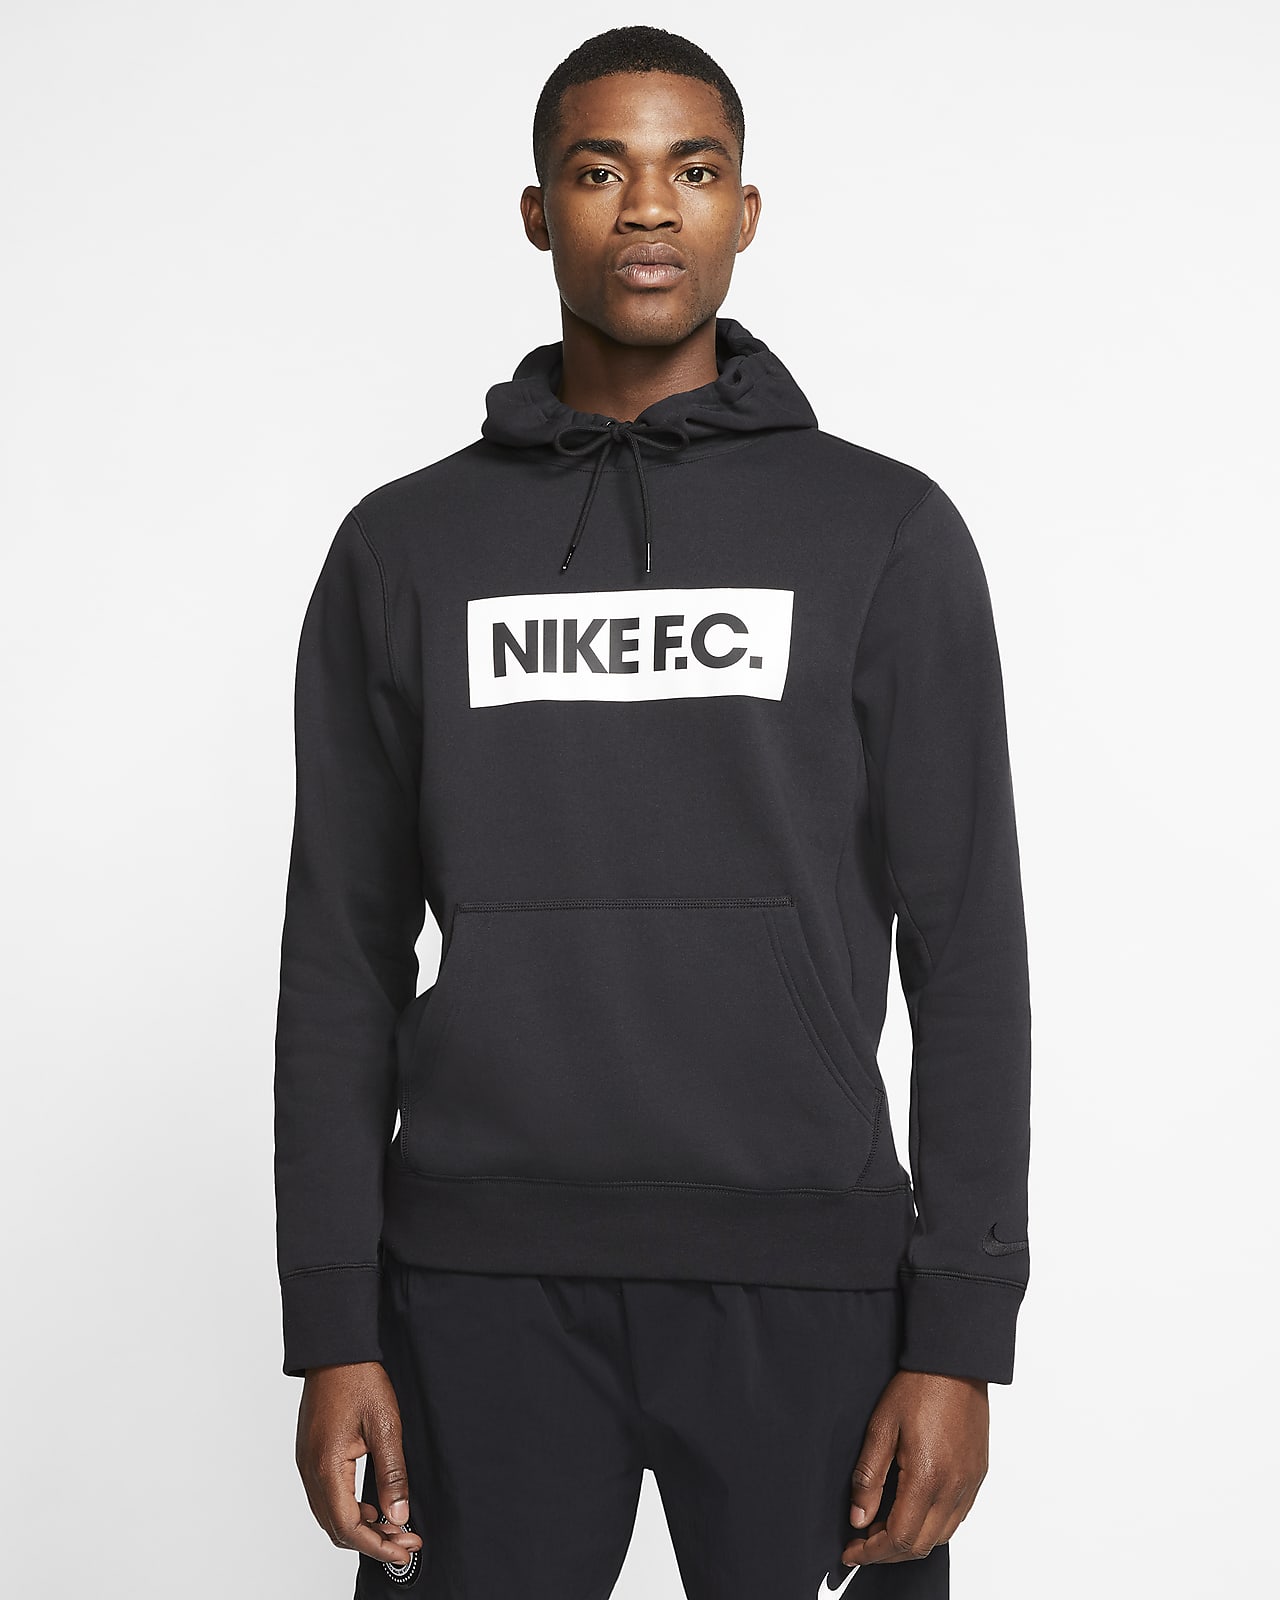 Nike F.C. Men's Pullover Fleece Football Hoodie. Nike EG